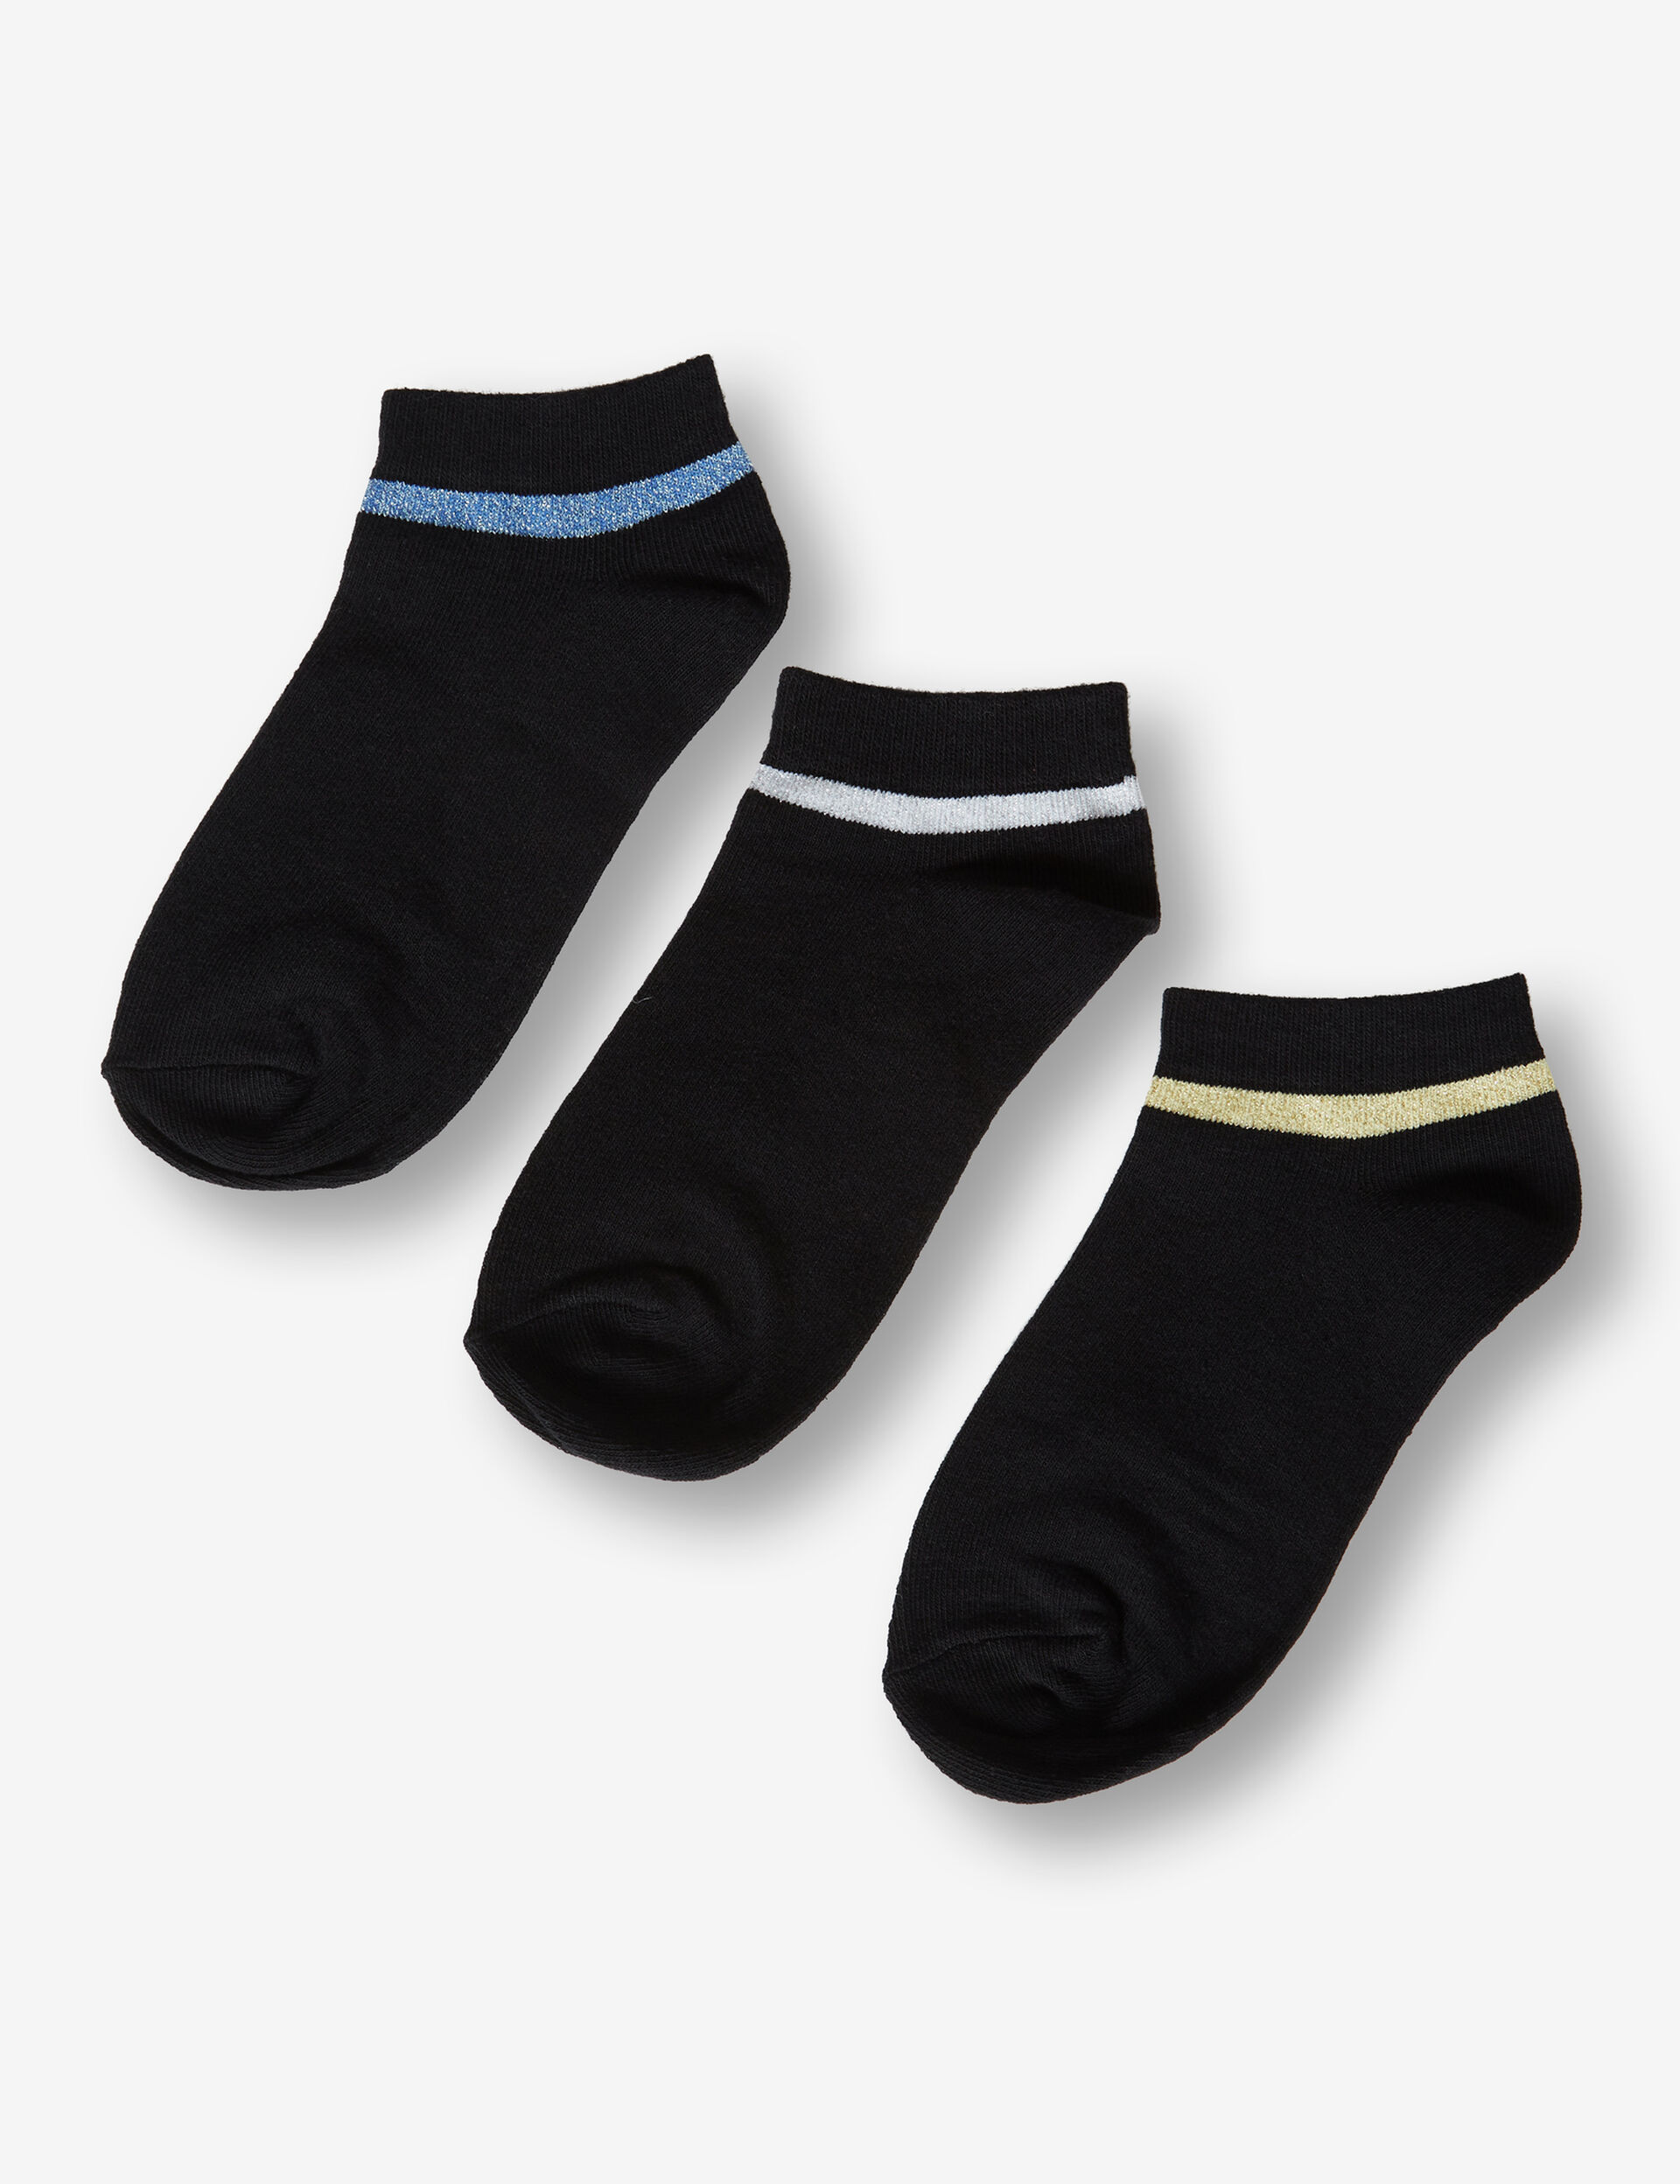 Lurex trainer socks